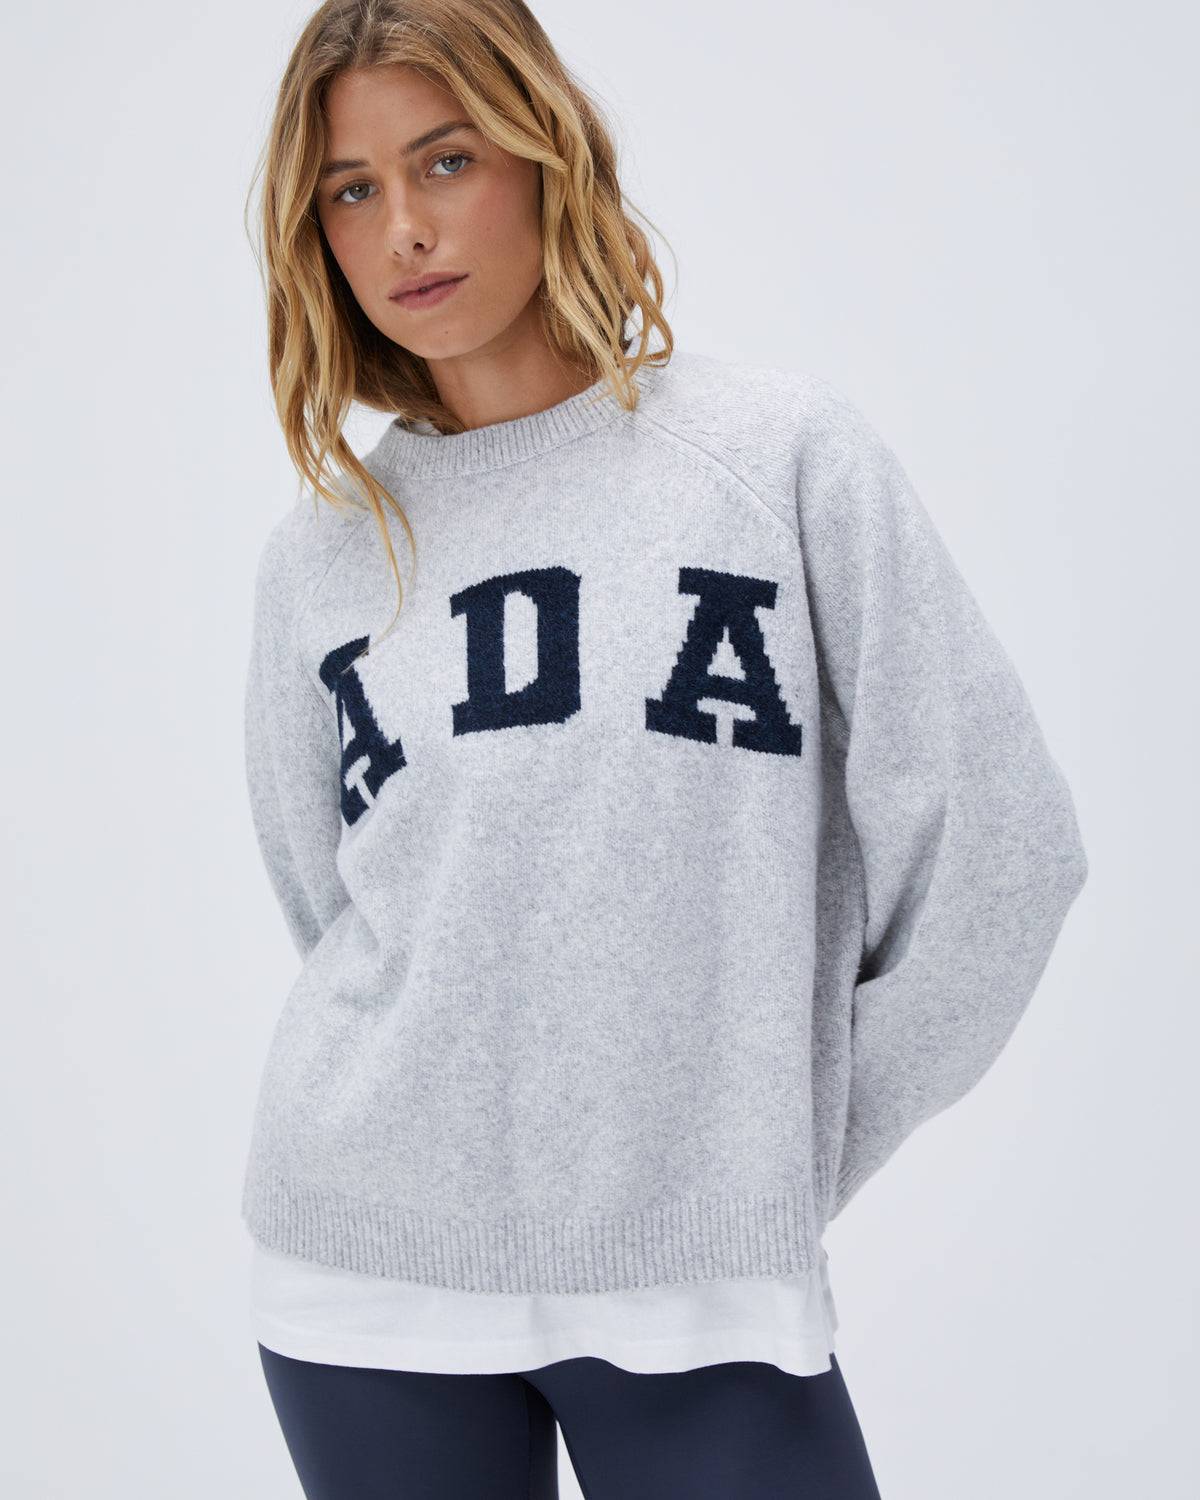 ADA' Knit Sweatshirt - Light Grey